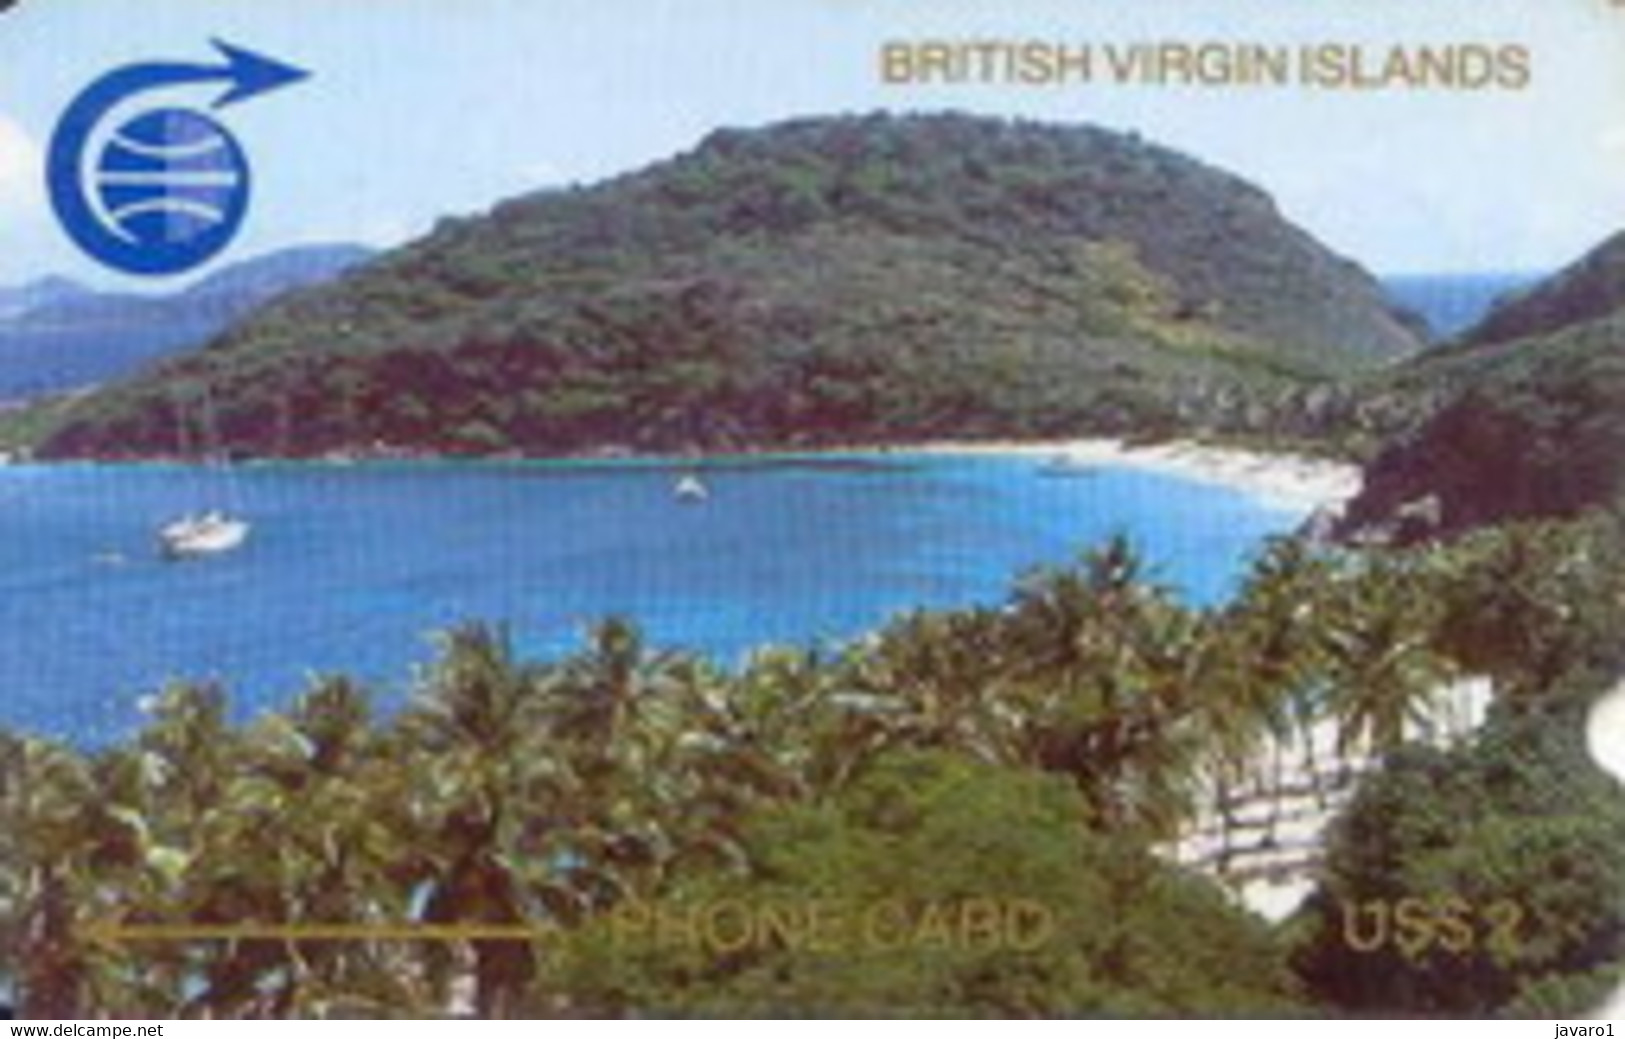 BVI : 001C US$10 (Large Notch) MINT - Jungferninseln (Virgin I.)